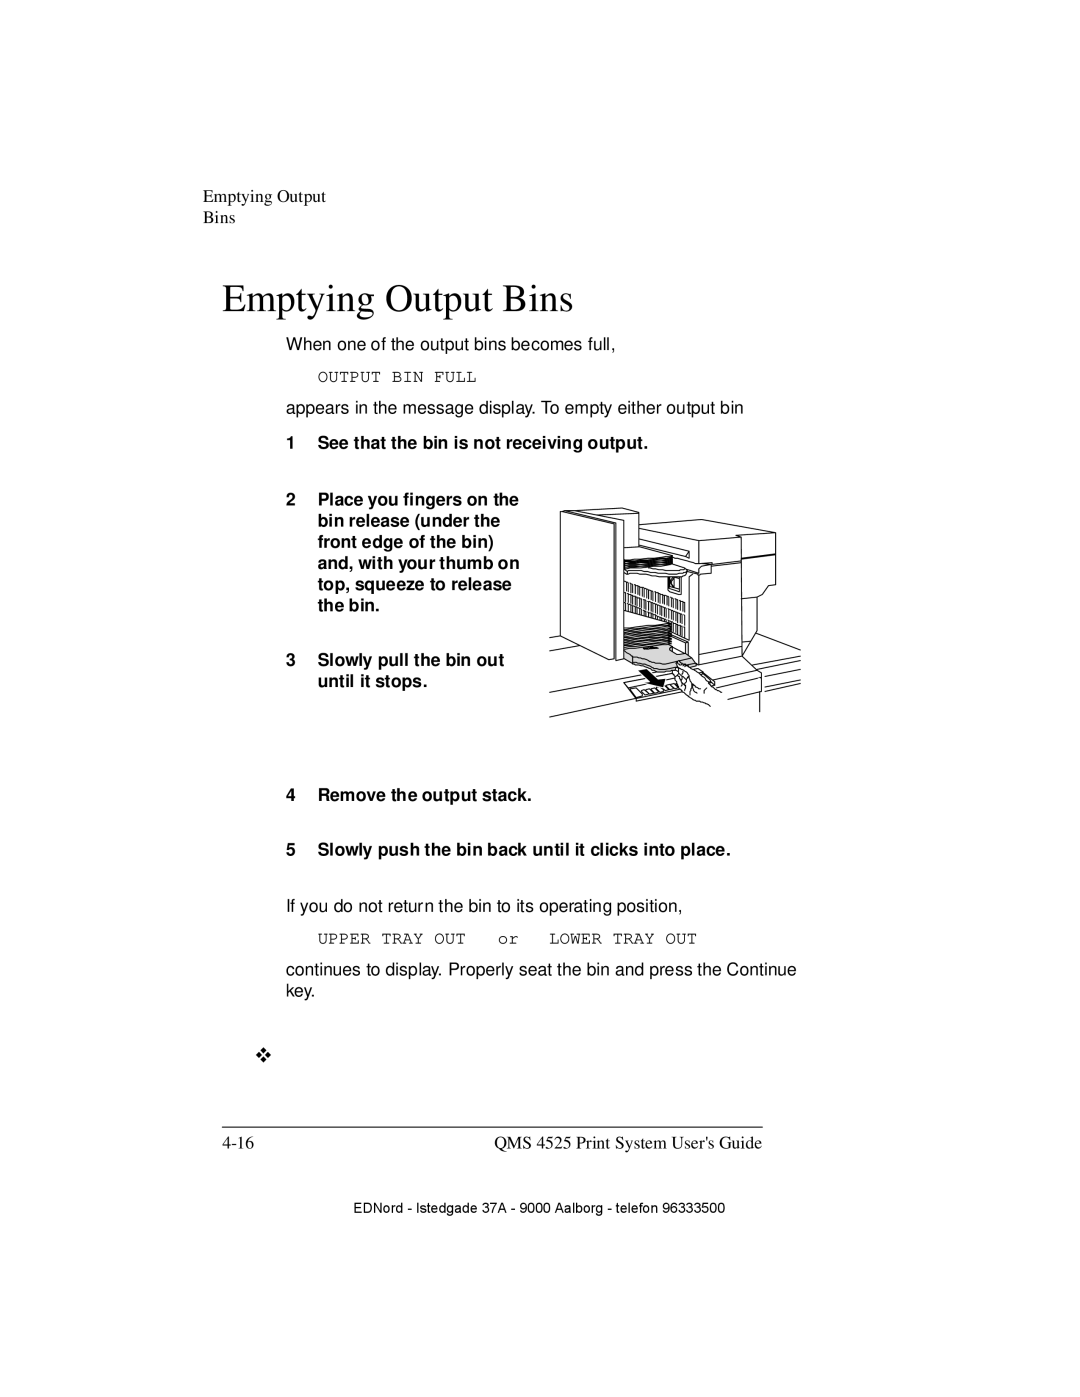 IBM QMS 4525 manual Emptying Output Bins 